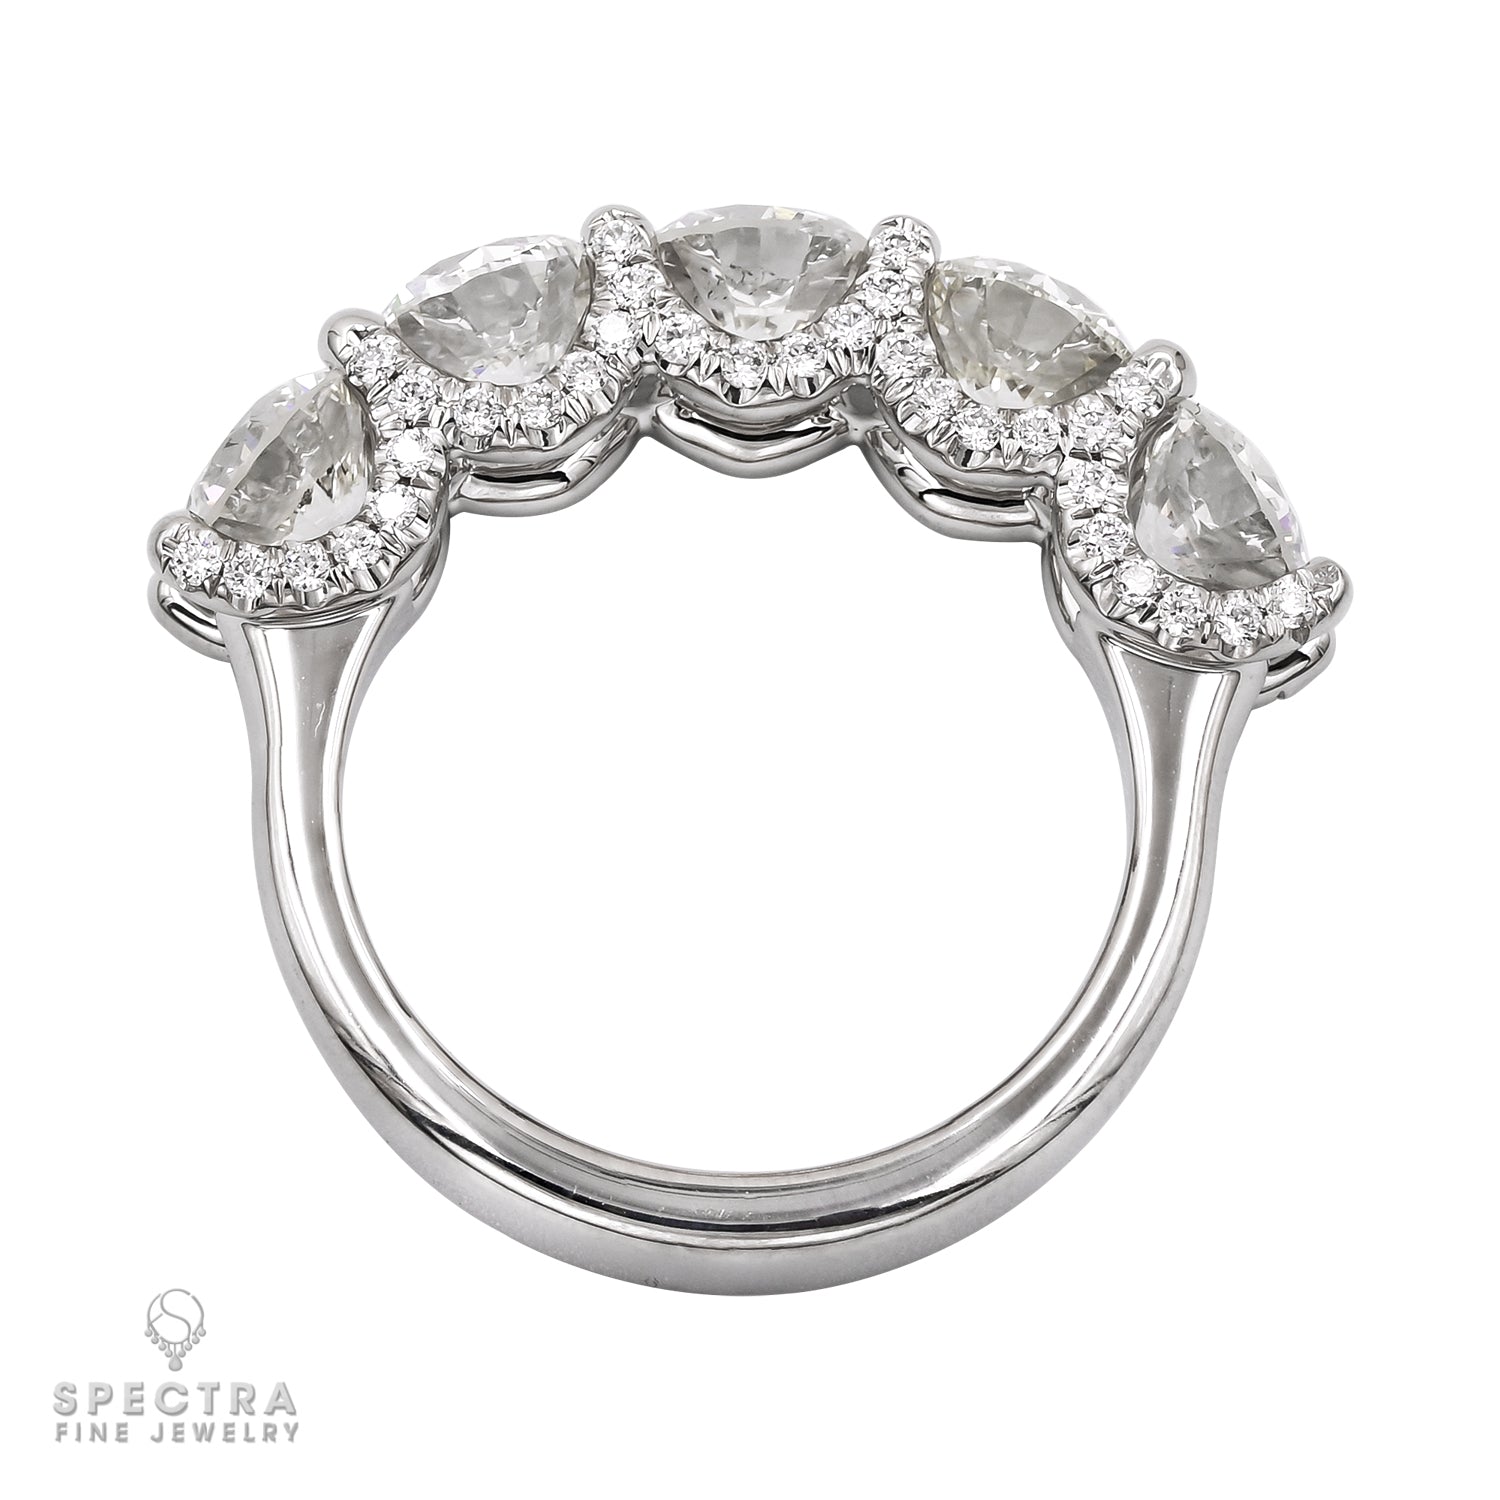 Spectra Fine Jewelry Contemporary 5-Stone Diamond Ring